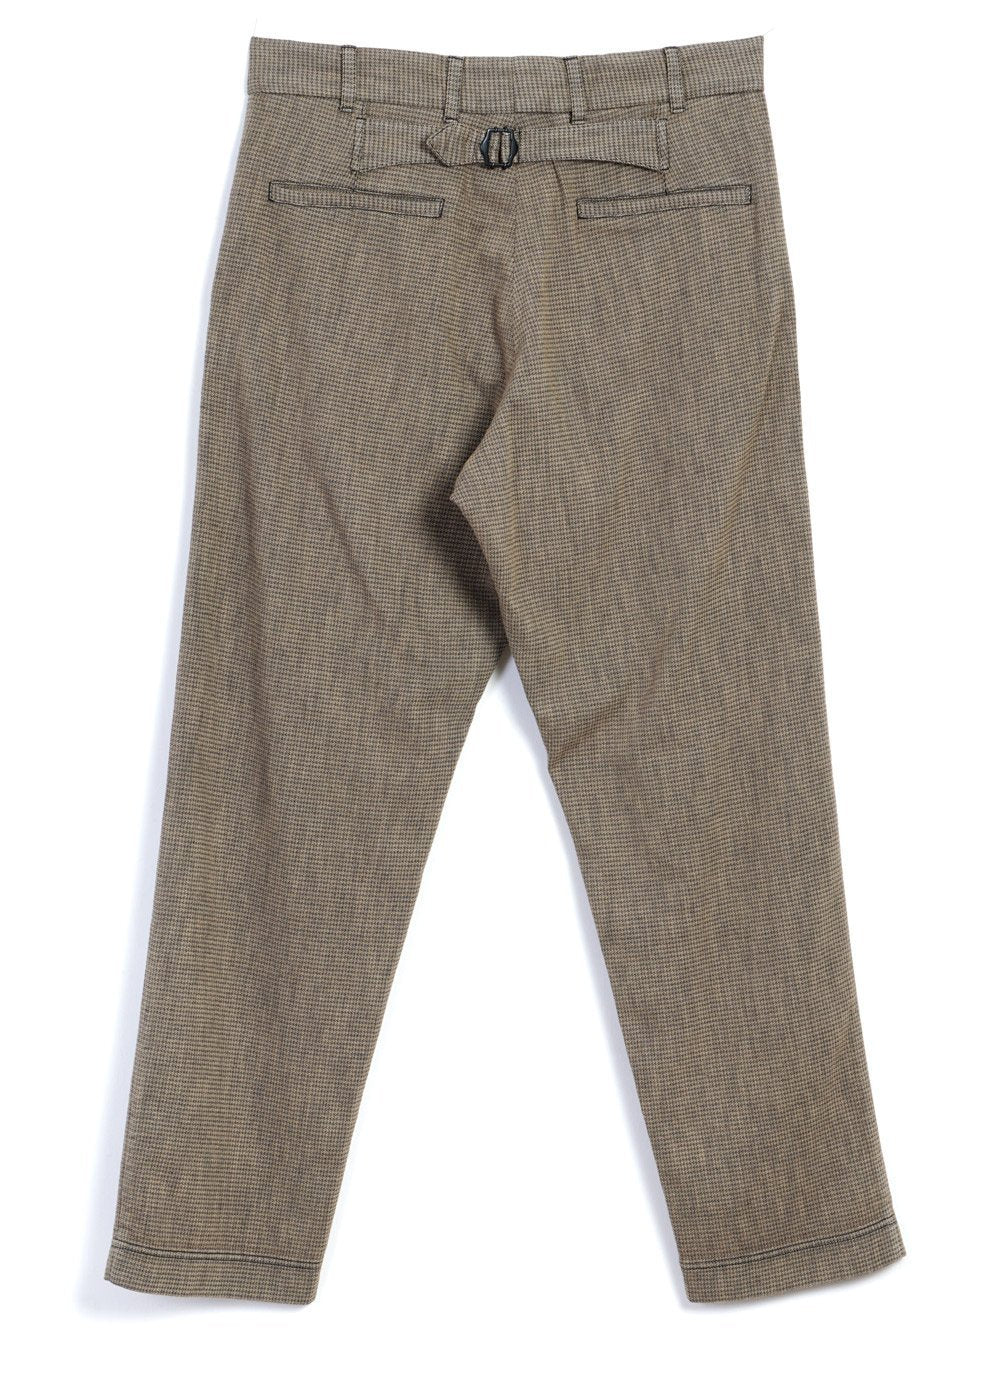 HANSEN GARMENTS - KIAN | Wide Fit Trousers | Lion - HANSEN Garments